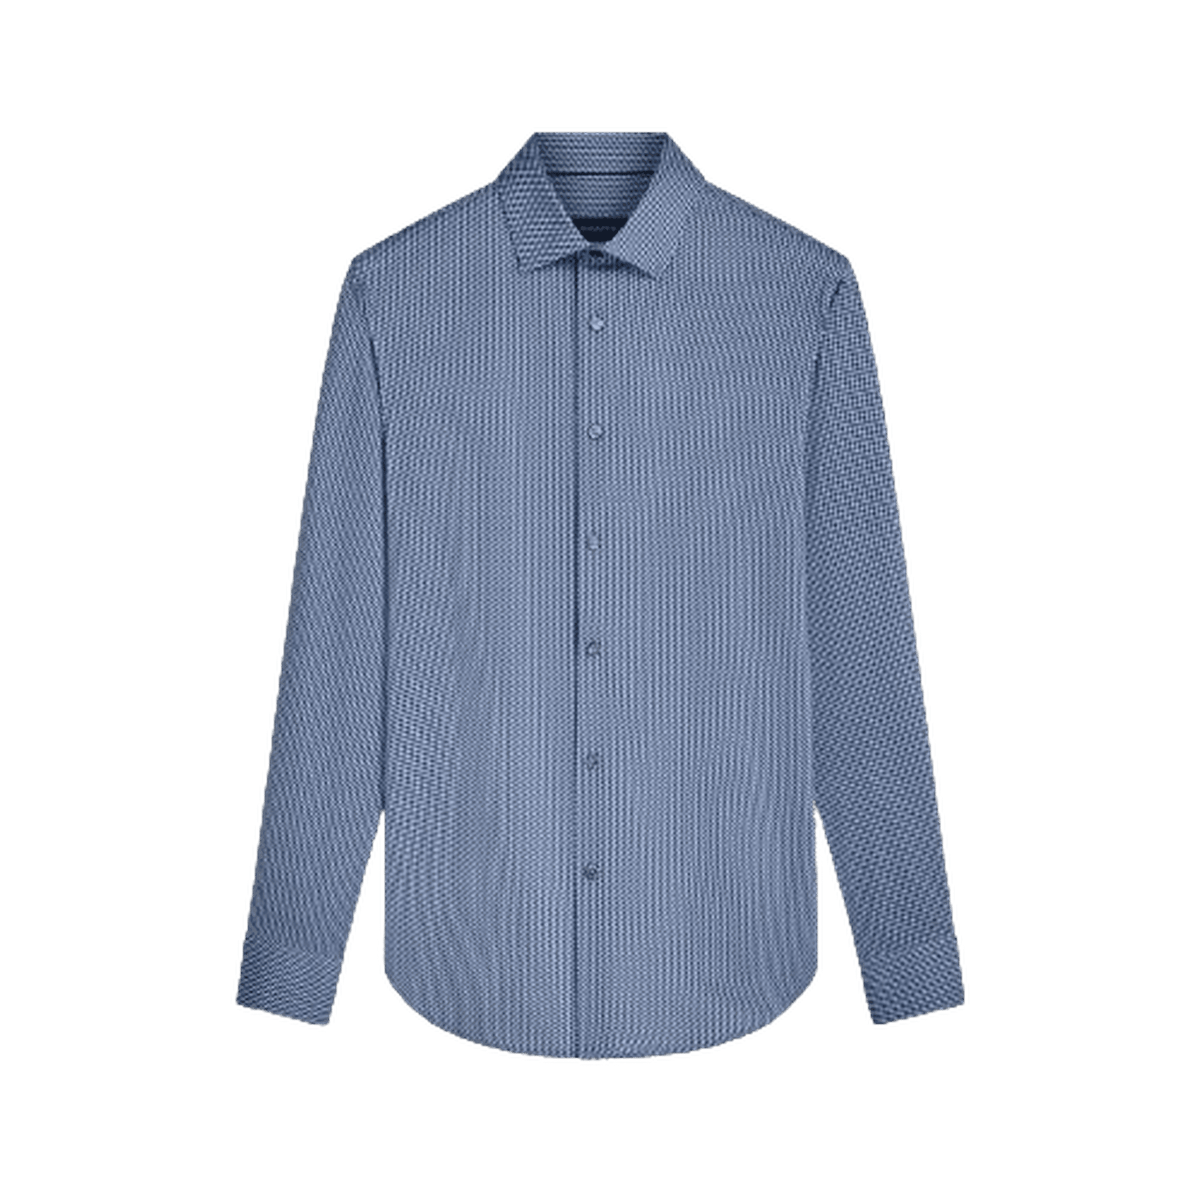 BUGATCHI: James Geometric OoohCotton Shirt | Guys and Co.